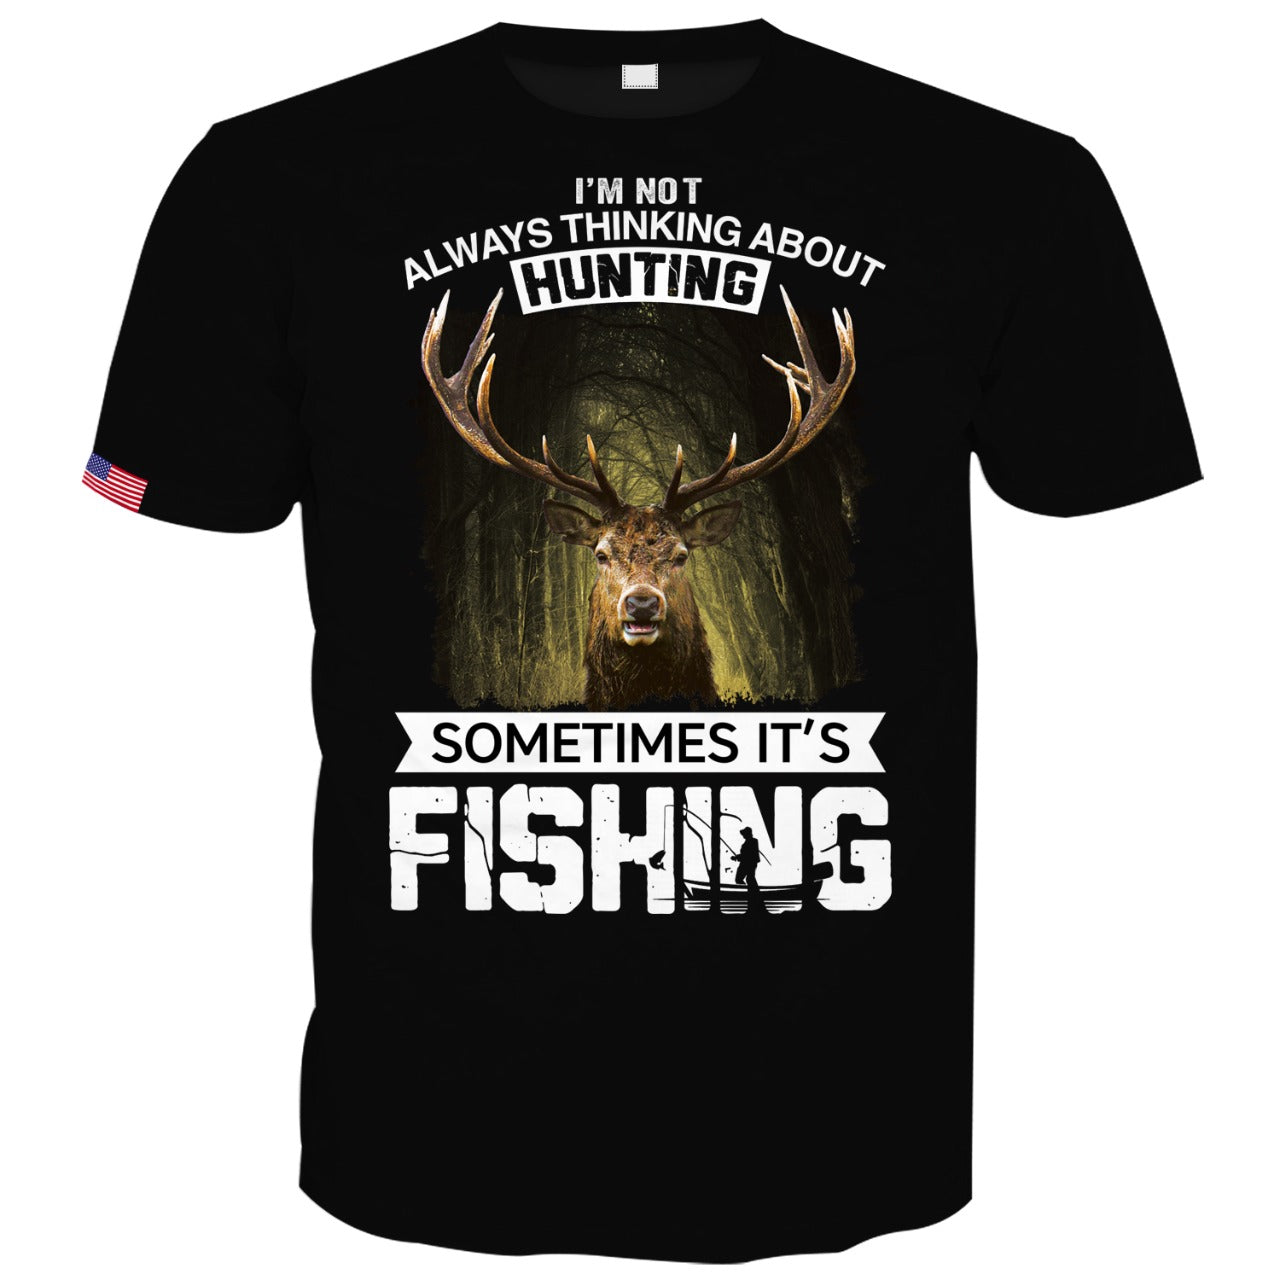 I'm Not Always Grumpy, Sometimes I'm Fishing T-Shirt : .co